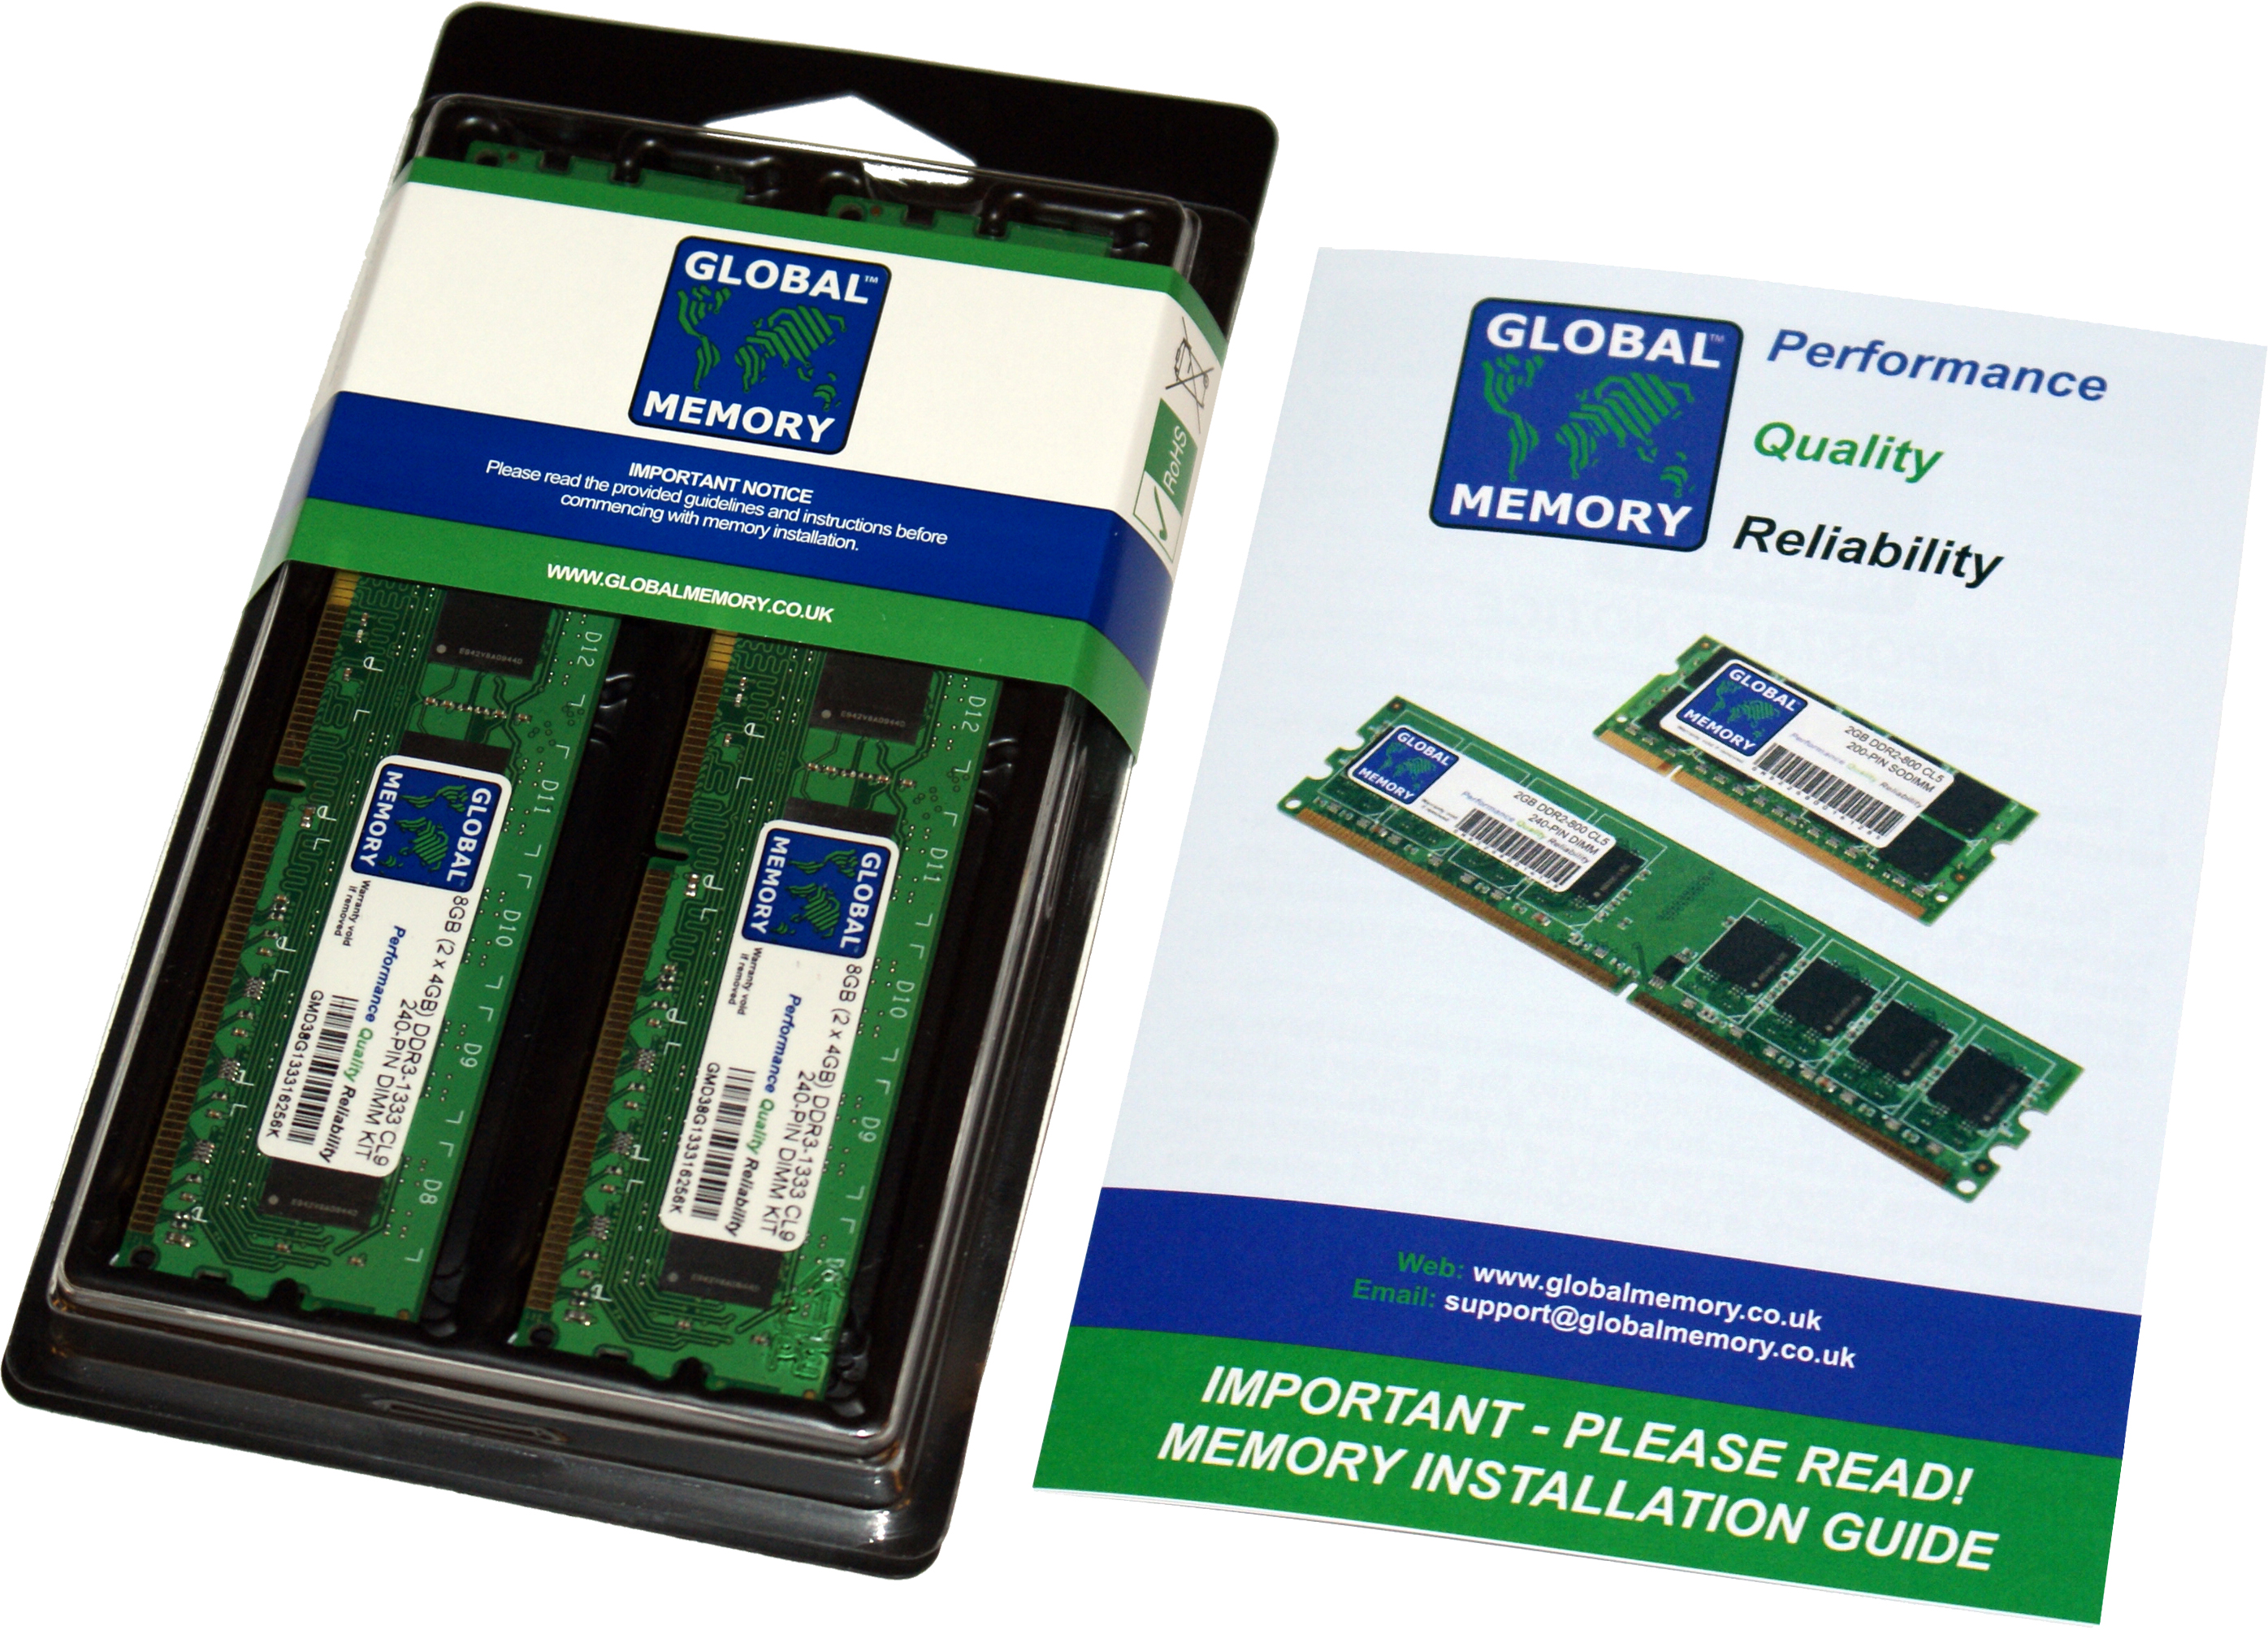 32GB (2 x 16GB) DDR4 2400MHz PC4-19200 288-PIN DIMM MEMORY RAM KIT FOR DELL PC DESKTOPS